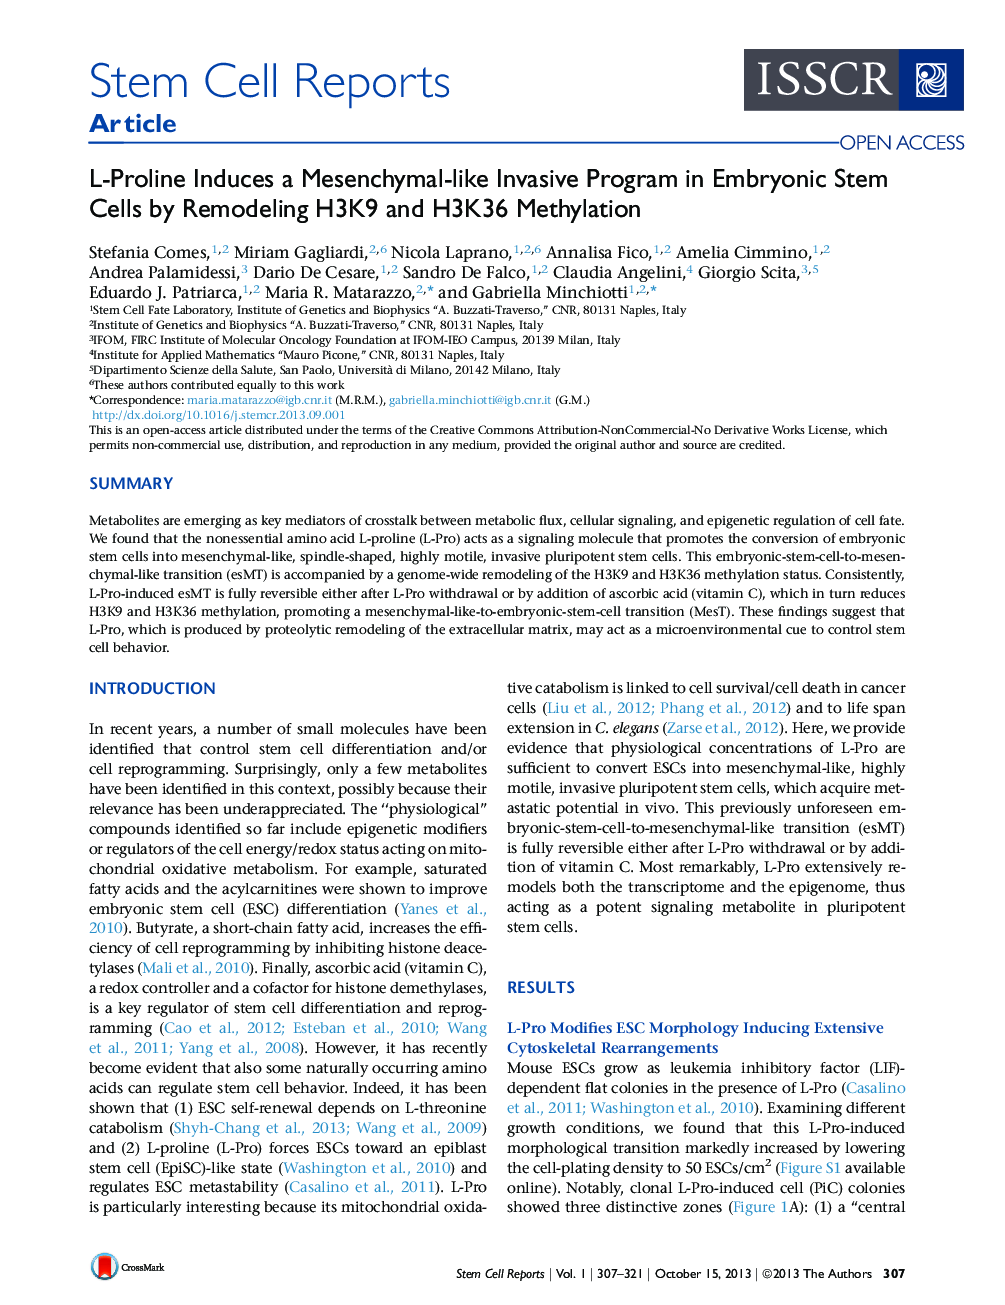 L-Proline Induces a Mesenchymal-like Invasive Program in Embryonic Stem Cells by Remodeling H3K9 and H3K36 Methylation 